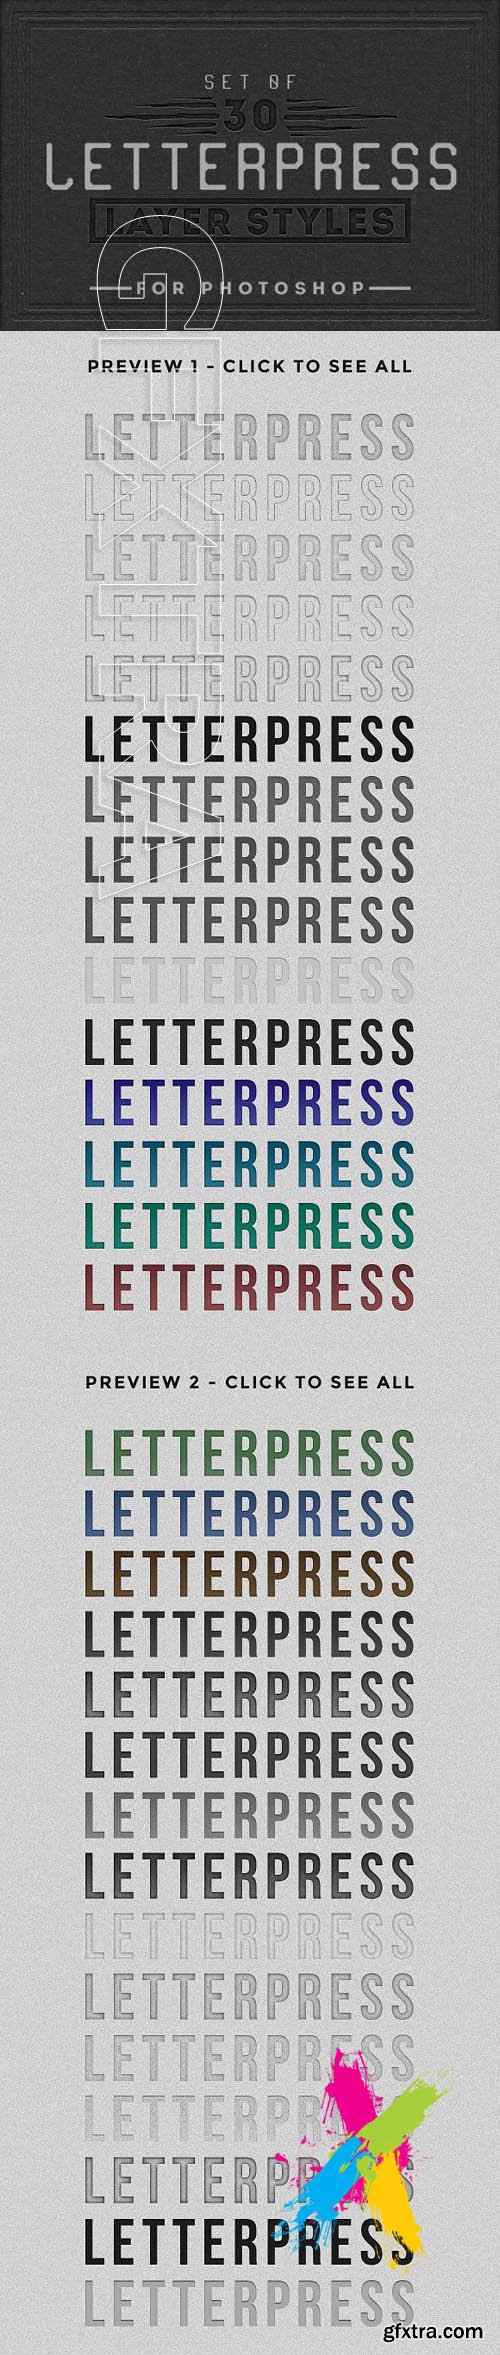 CM - Letterpress Layer Styles Photoshop 1513829